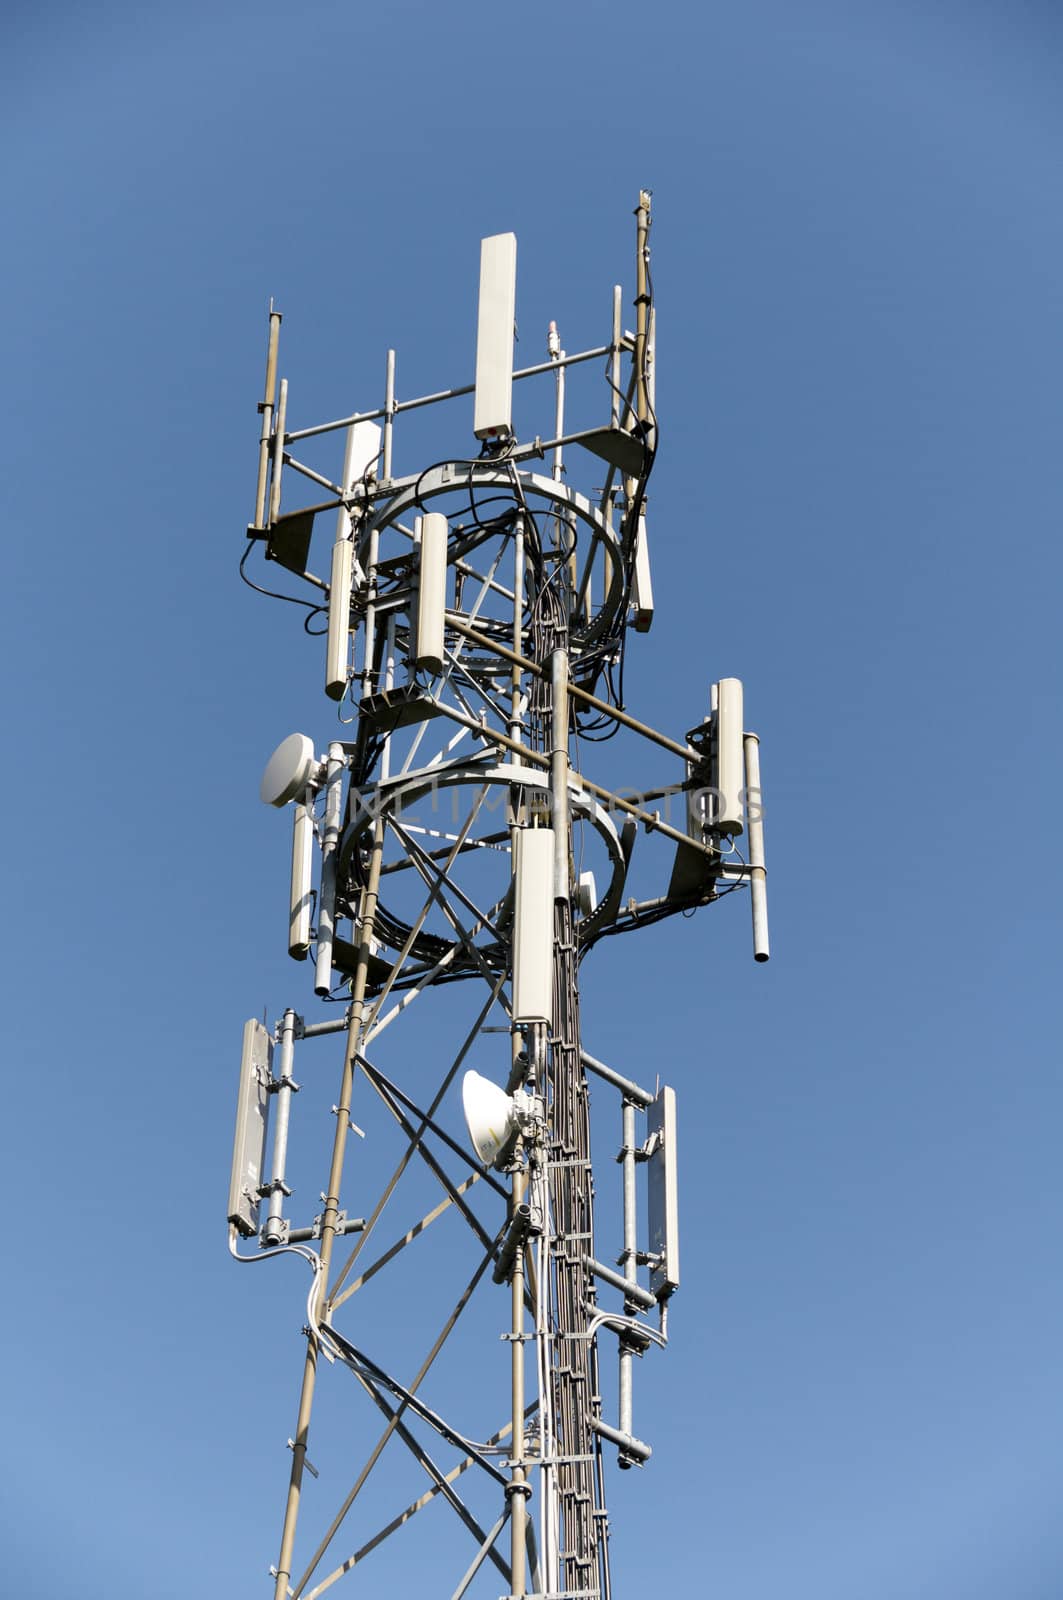 A phone mast against a clear blue sky